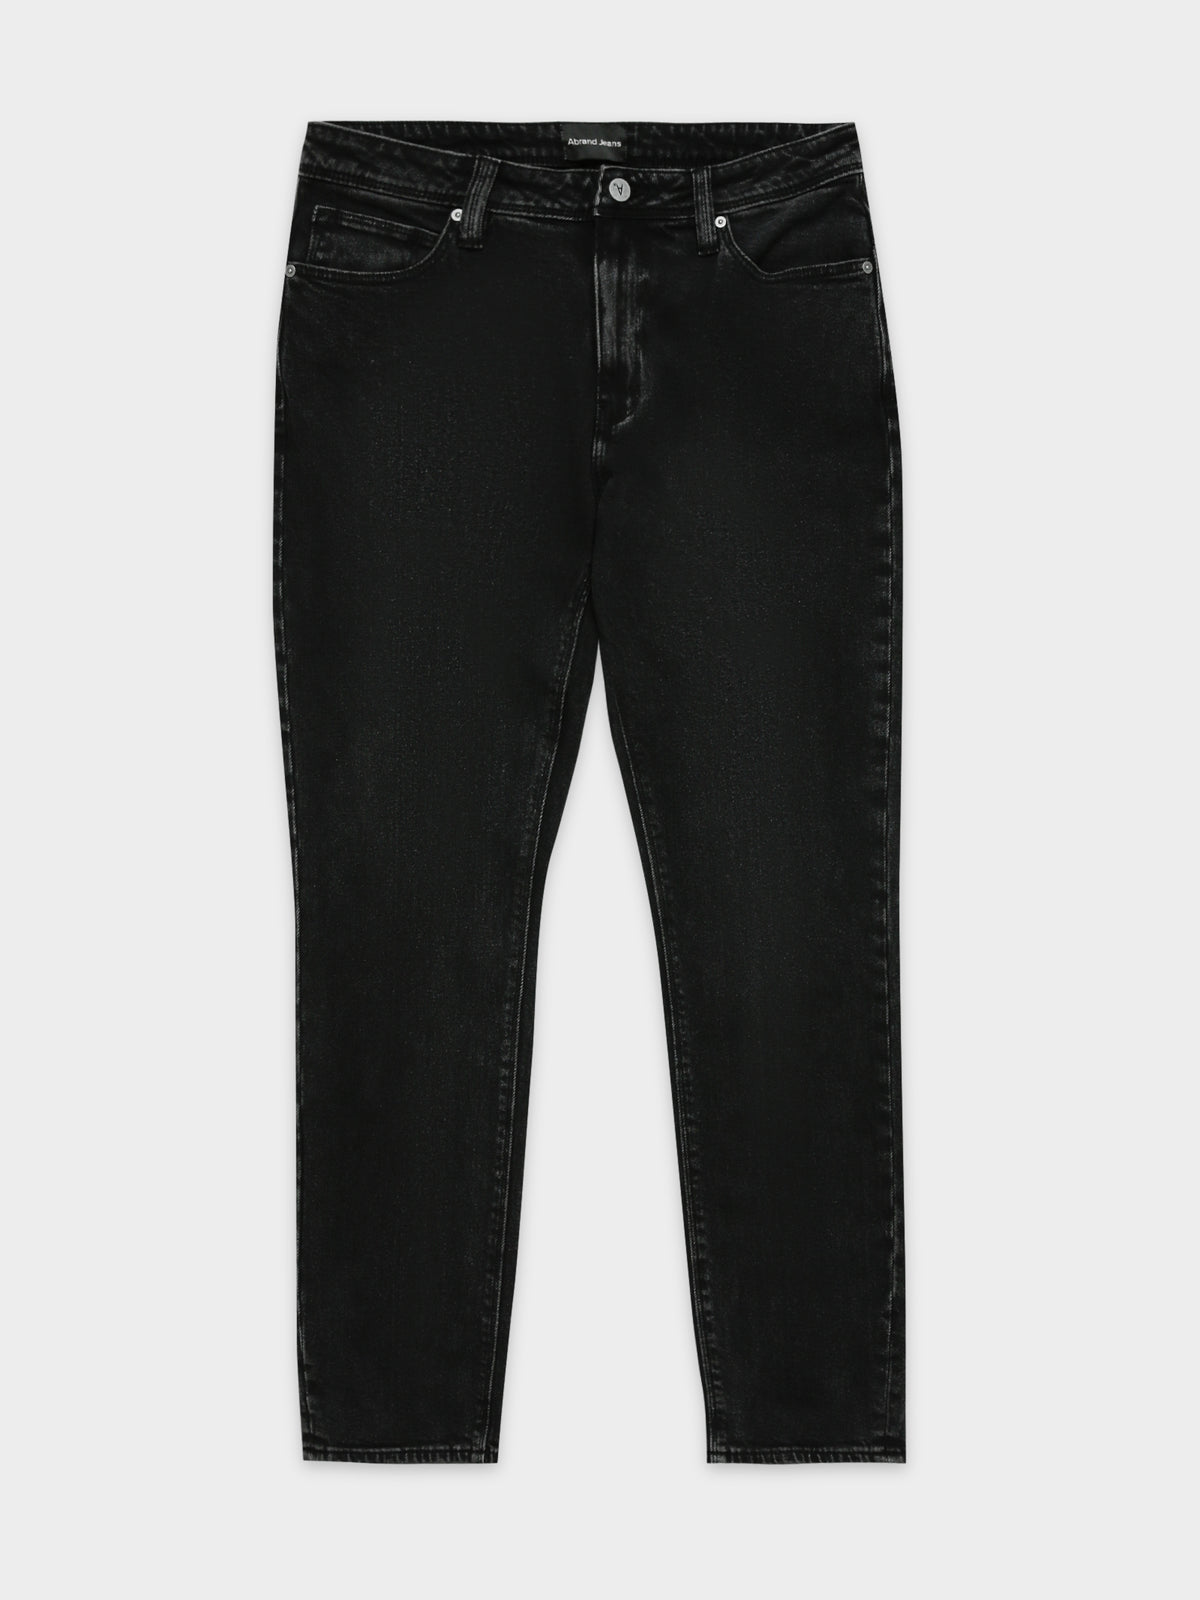 A Dropped Slim Jeans in Nebula Black